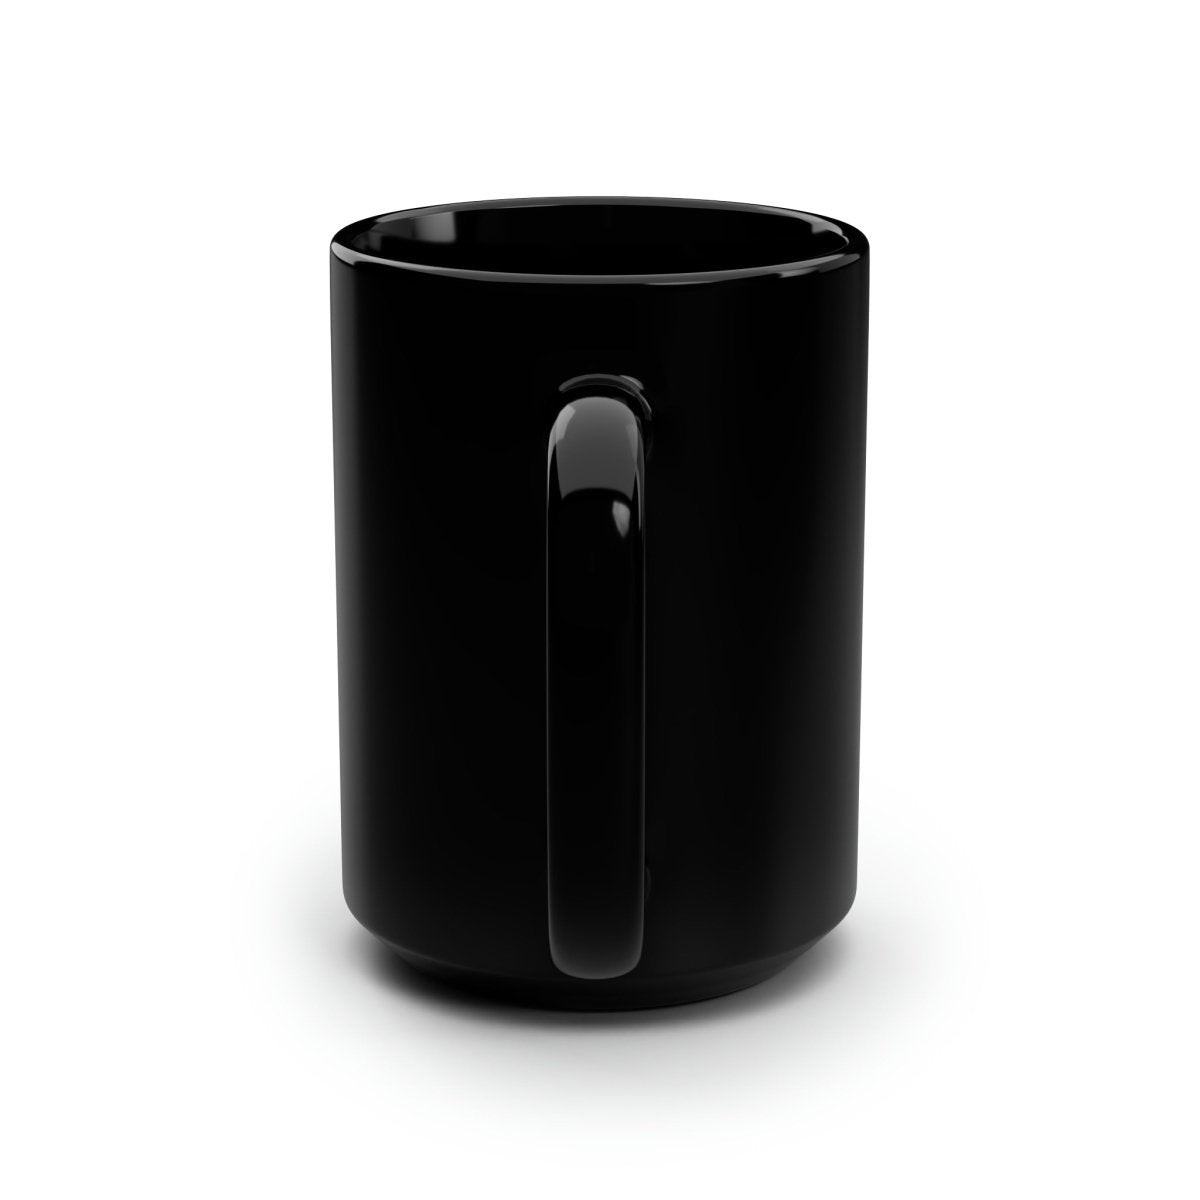 Ferrari Signature Sleek Black With White Lettering 15oz Coffee Mug - Mug - AI Print Spot